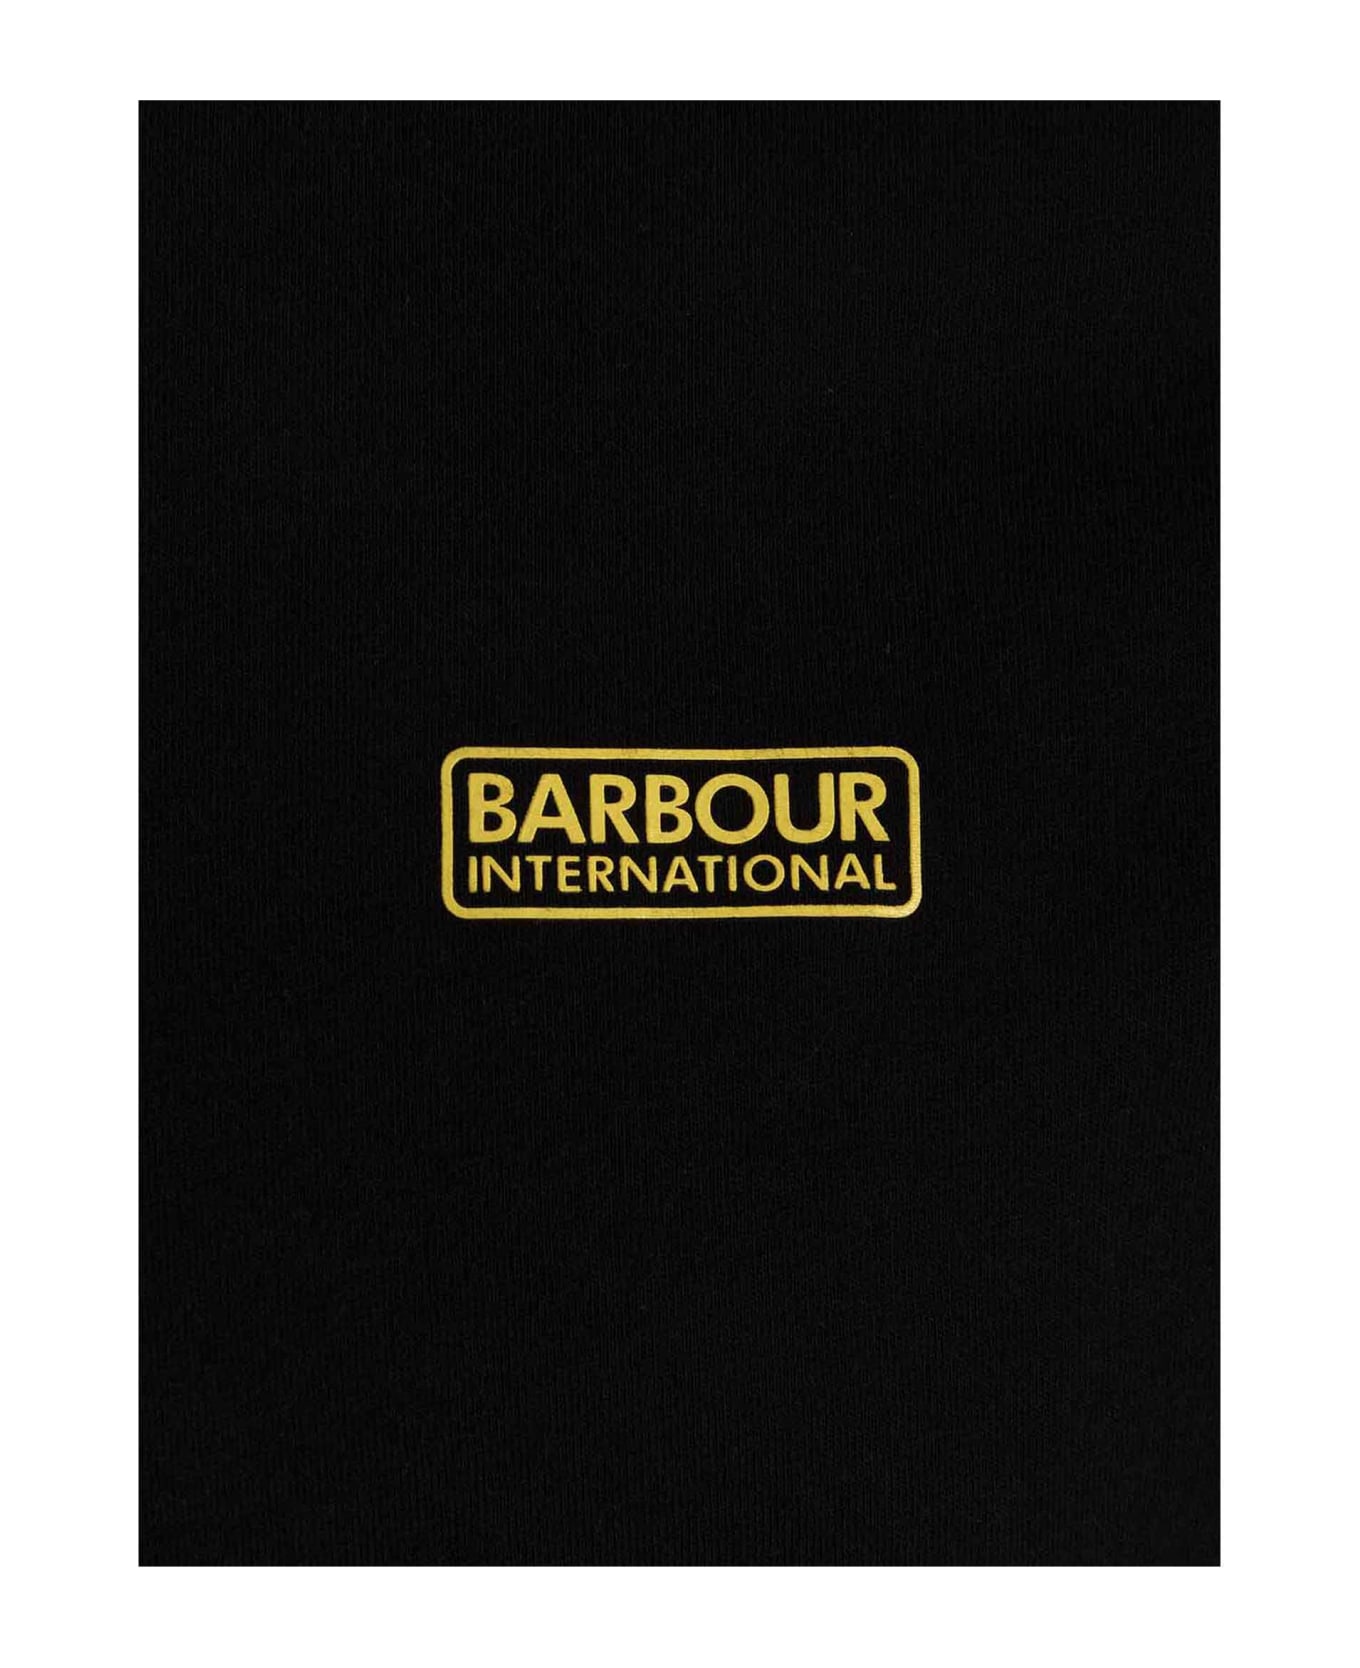 Barbour 'international T-shirt - Black/yellow シャツ